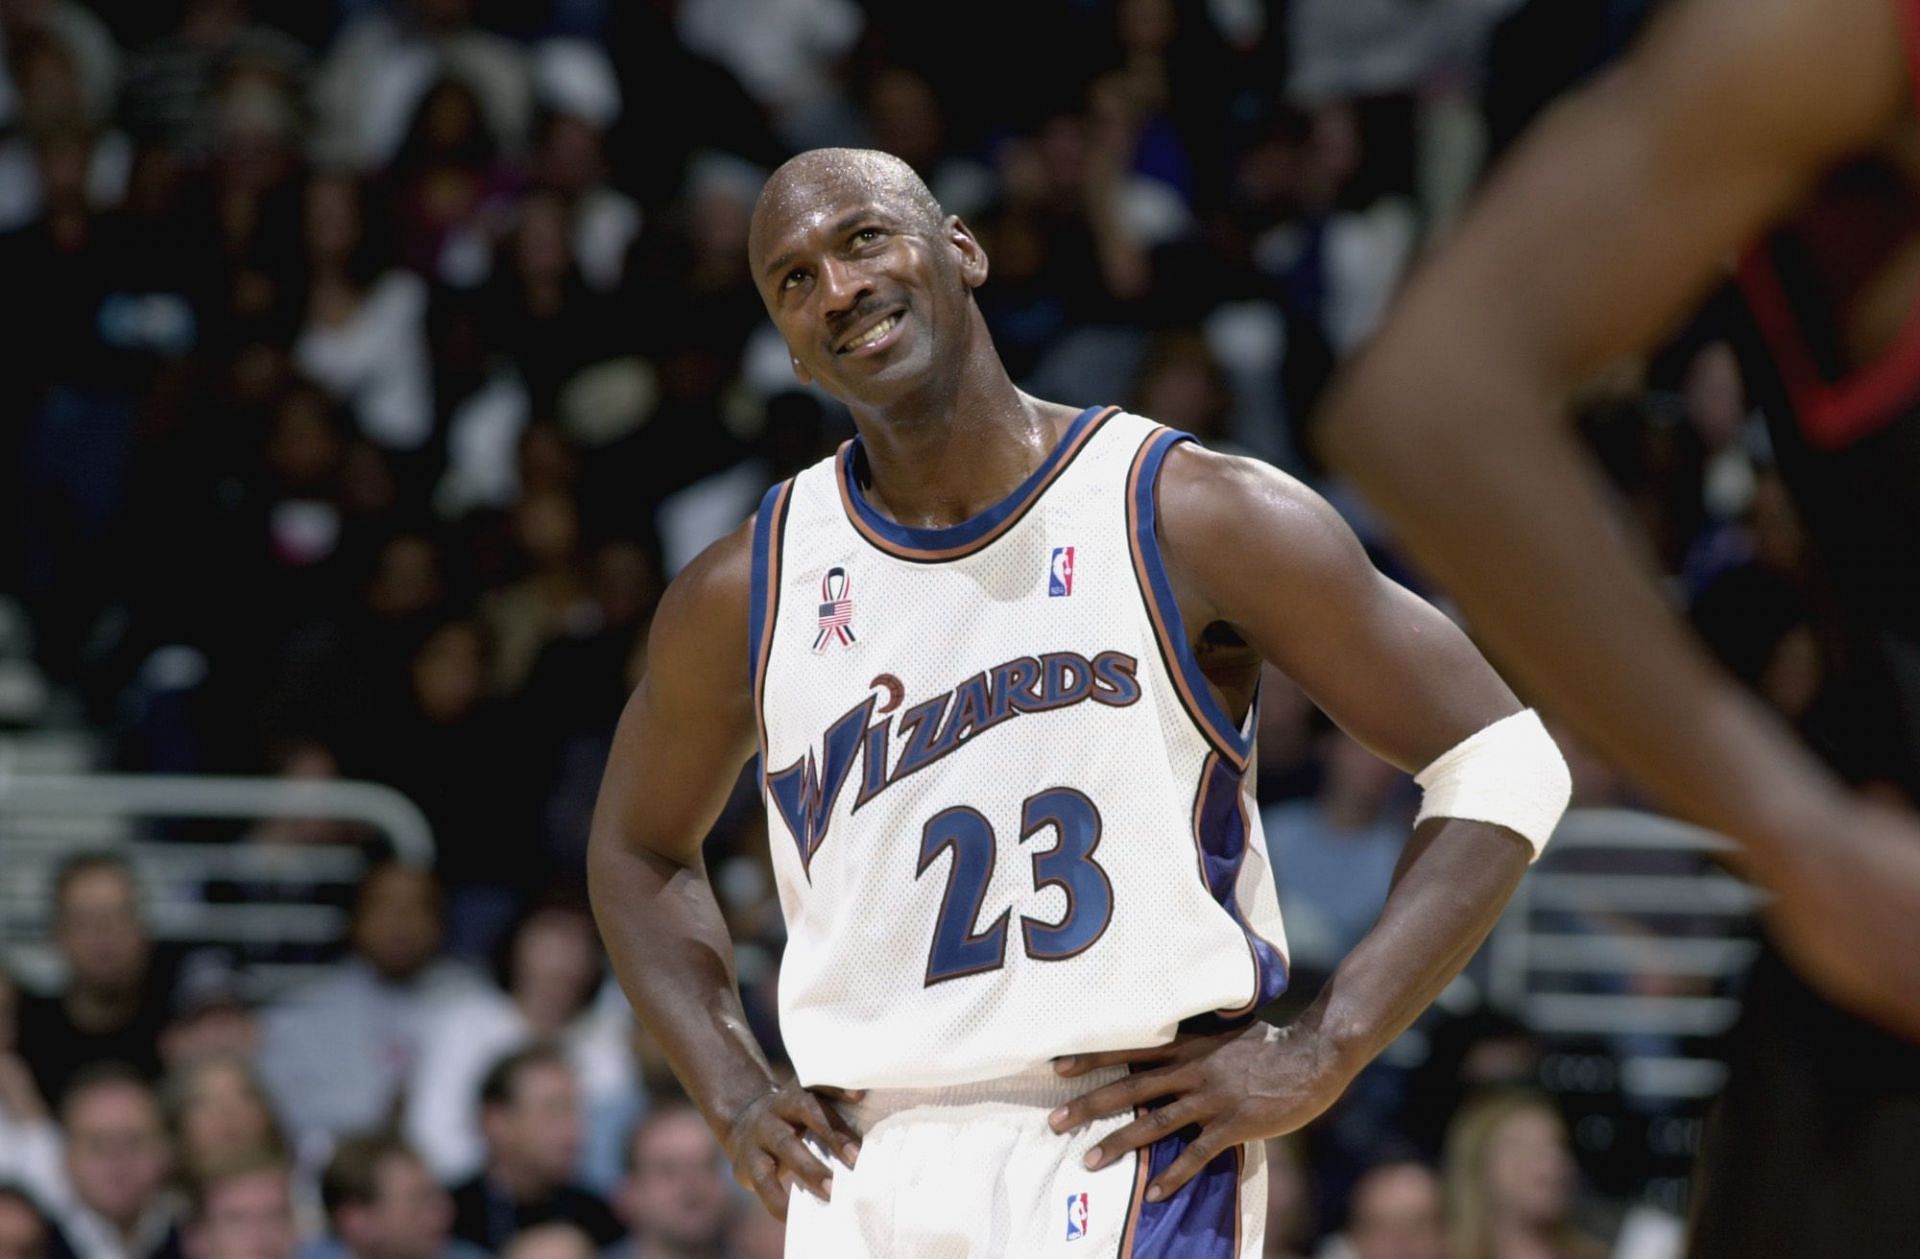 40-year old Michael Jordan scores 43 points (VIDEO)